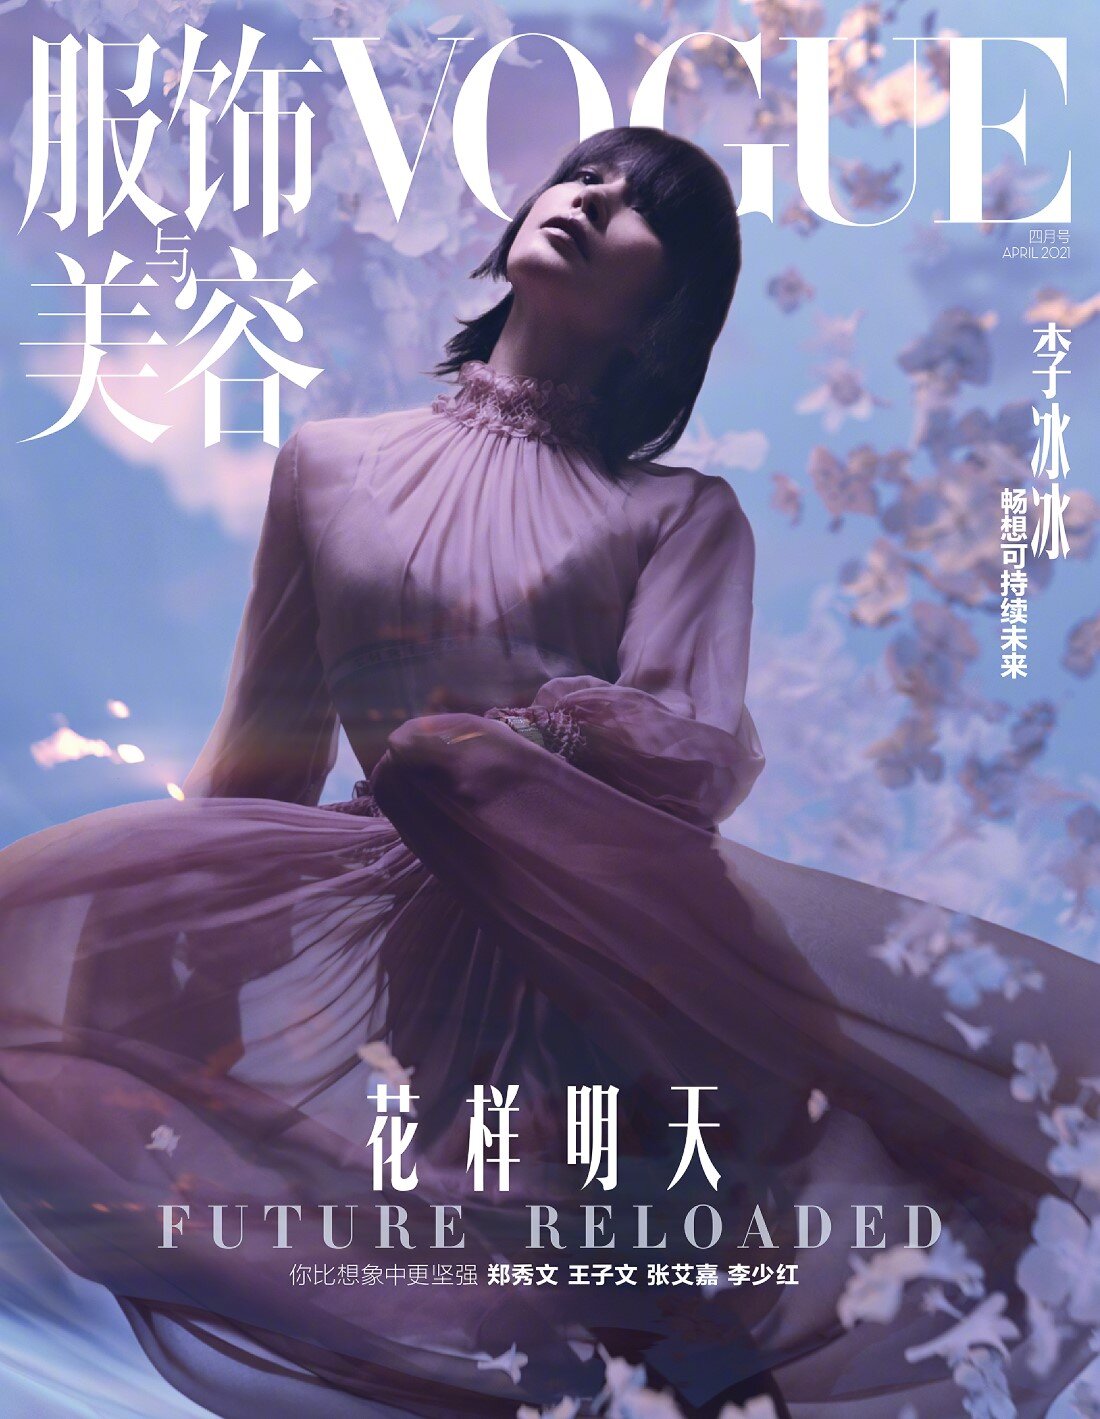 Li Bingbing by Chen Man Vogue China April 2021 (1).jpeg